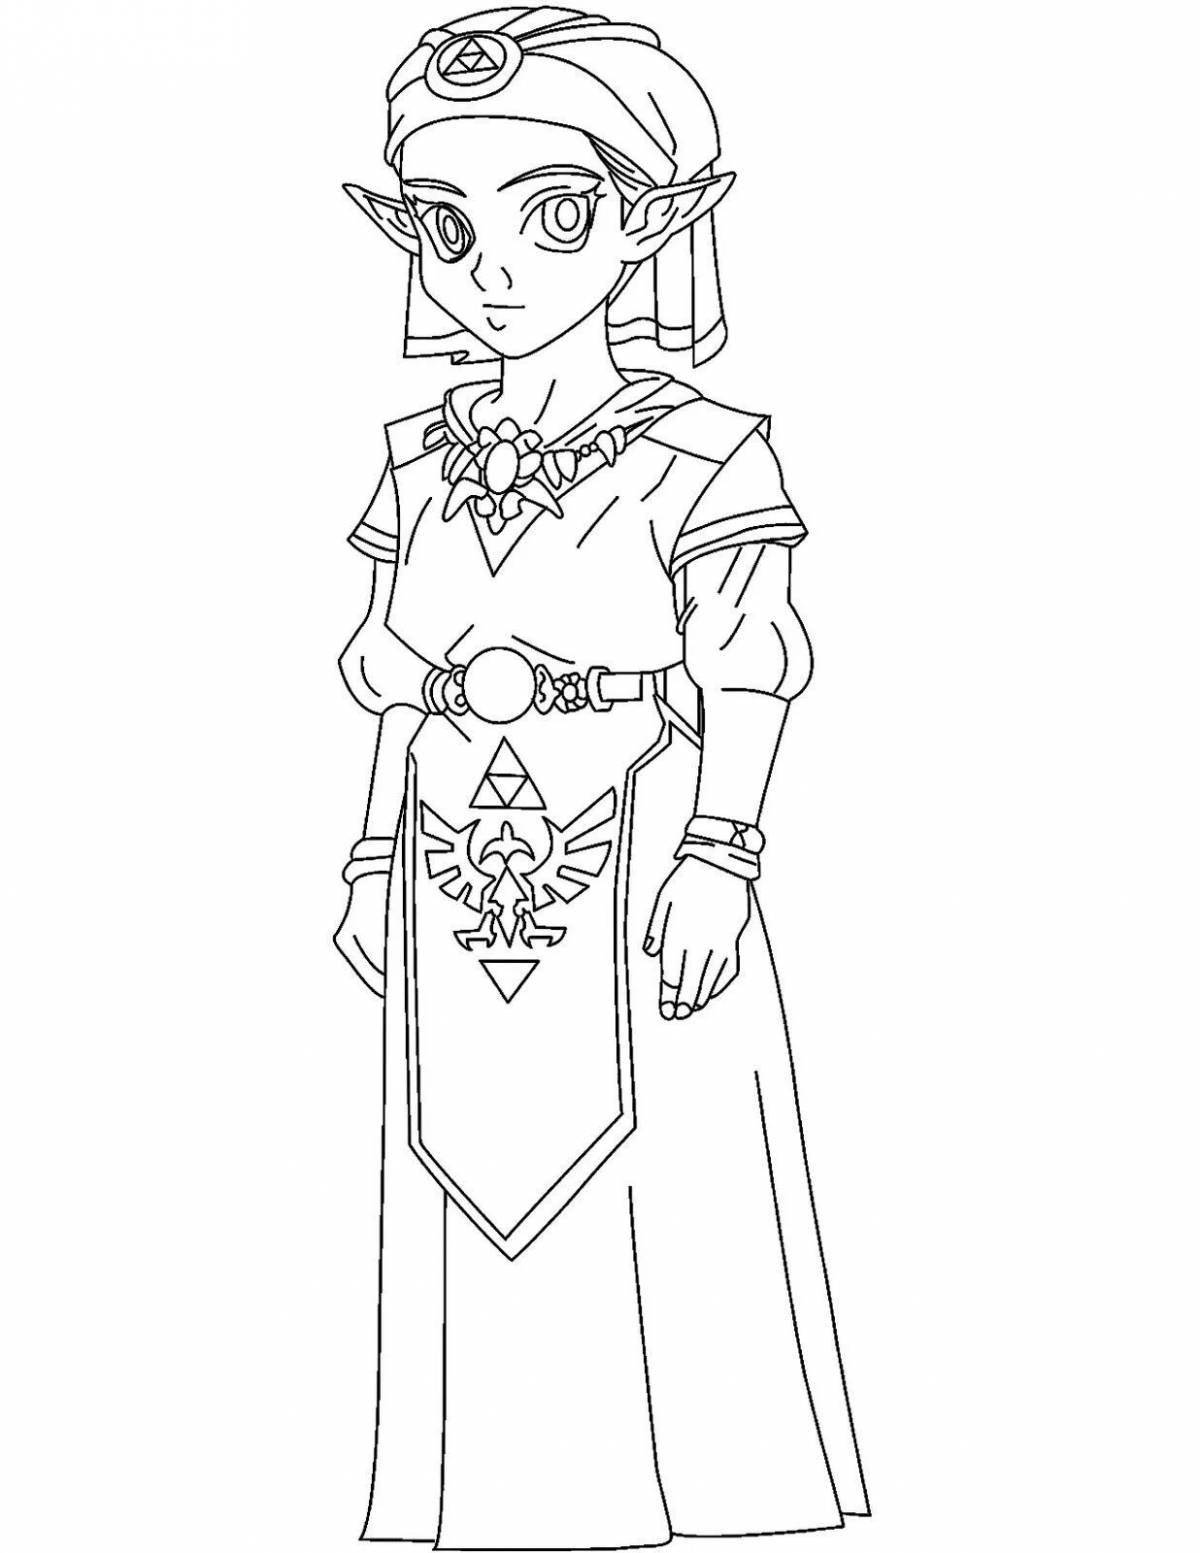 Zelda royal coloring